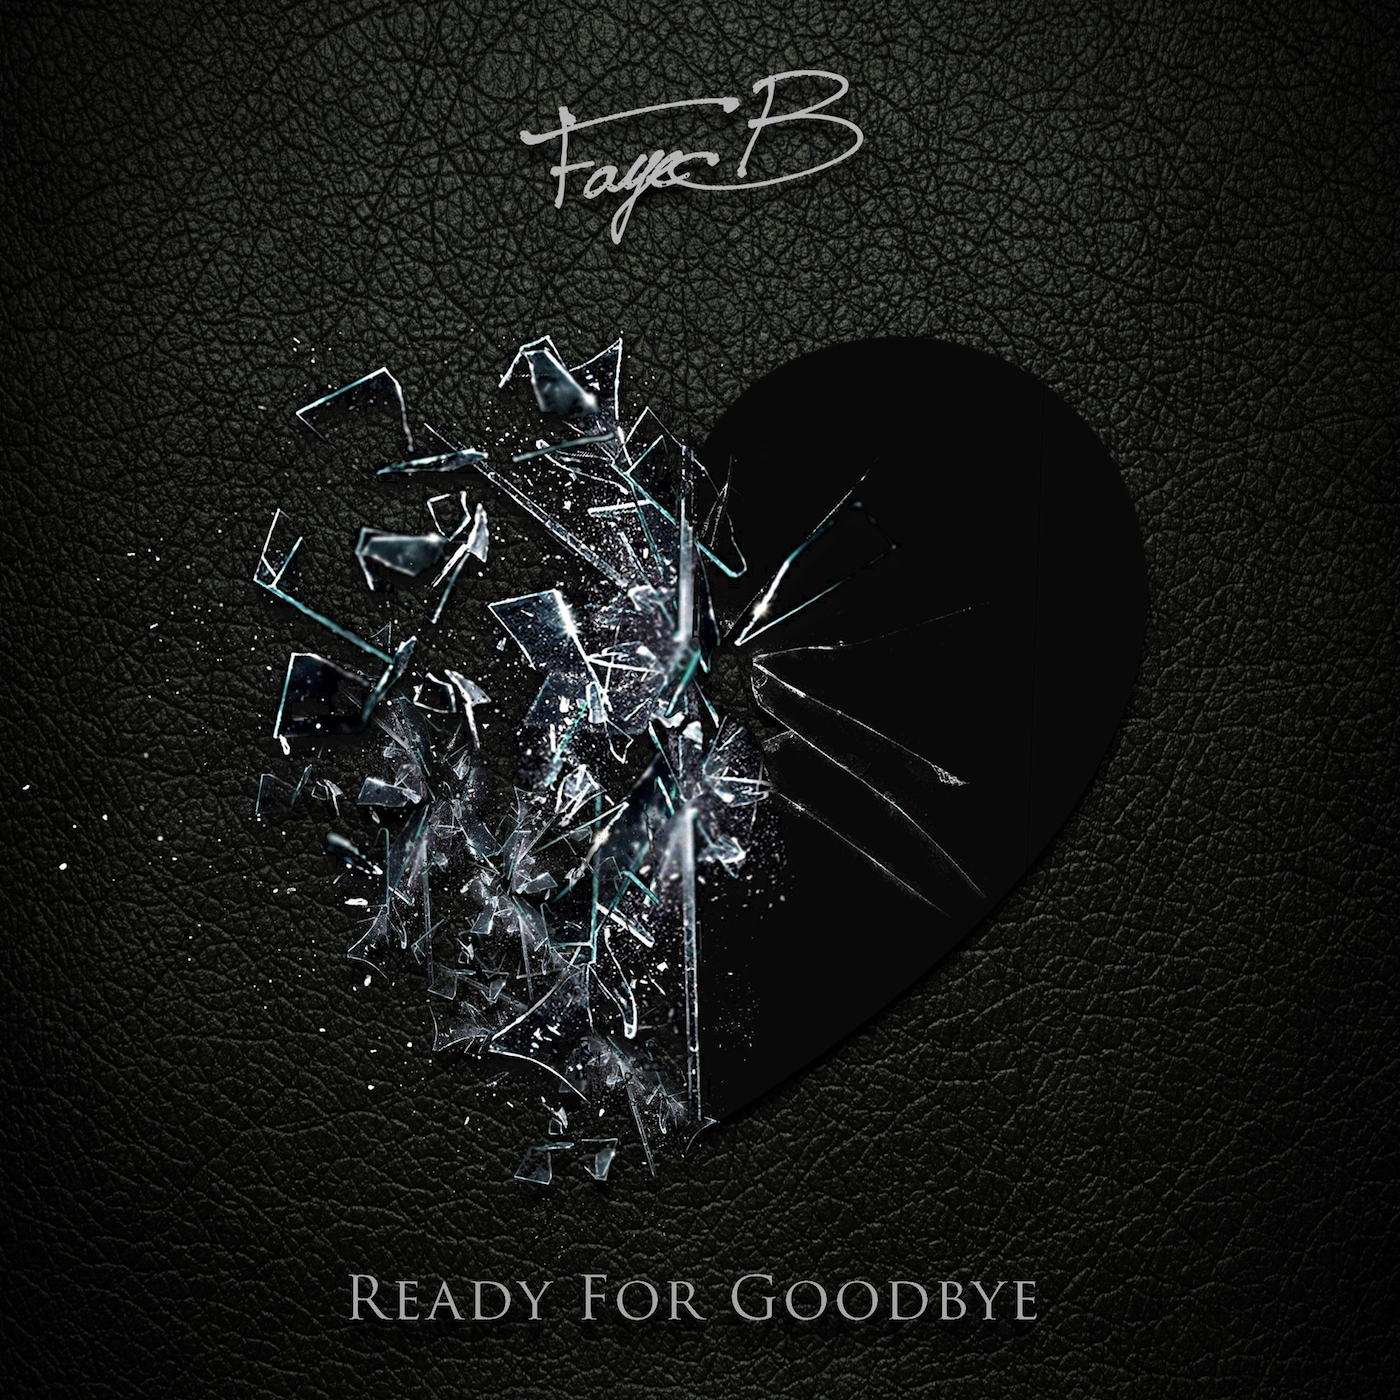 New Music: Faye B "Ready for Goodbye"